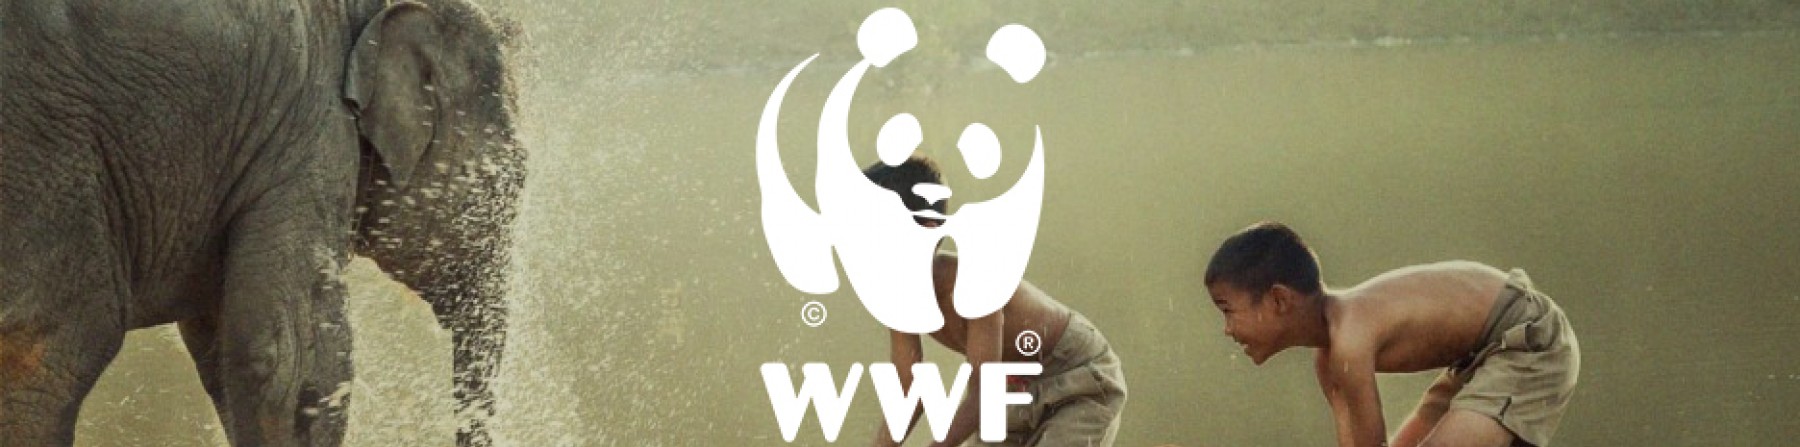 WWF Greece teaser